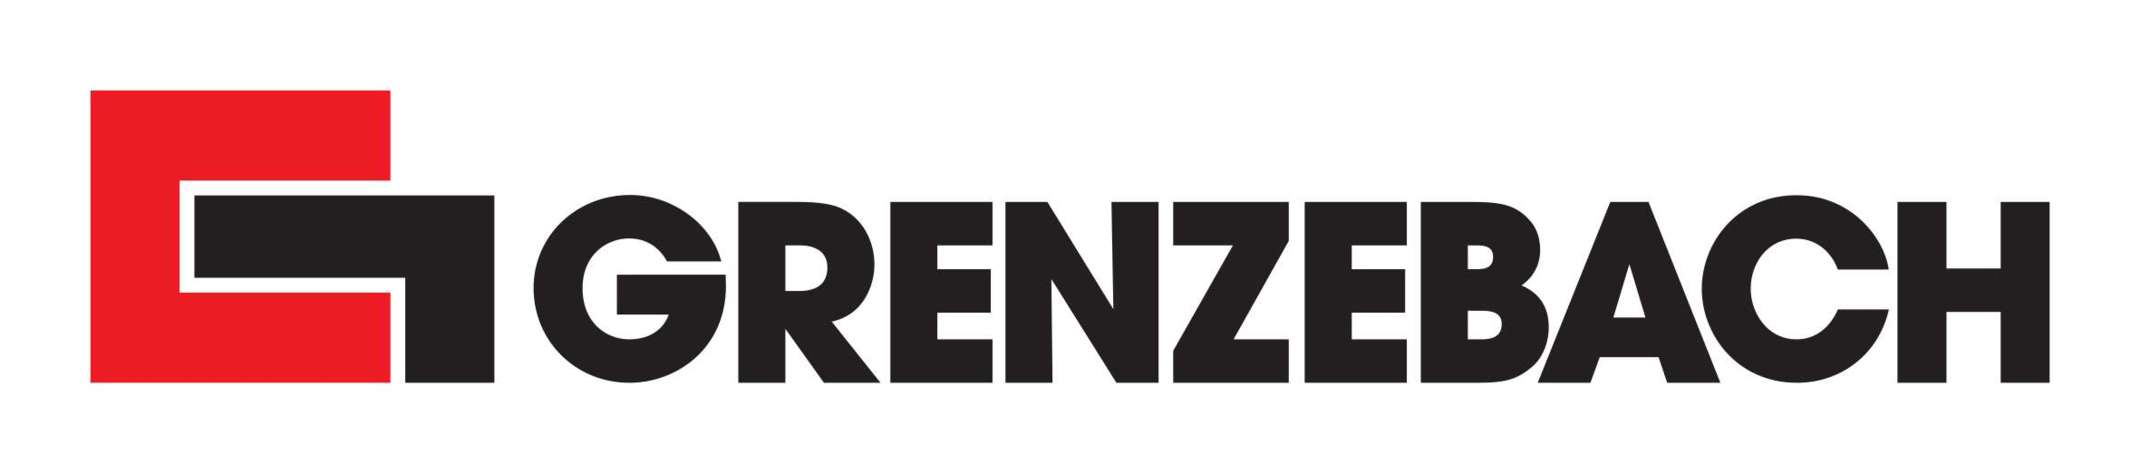 Grenzebach Logo